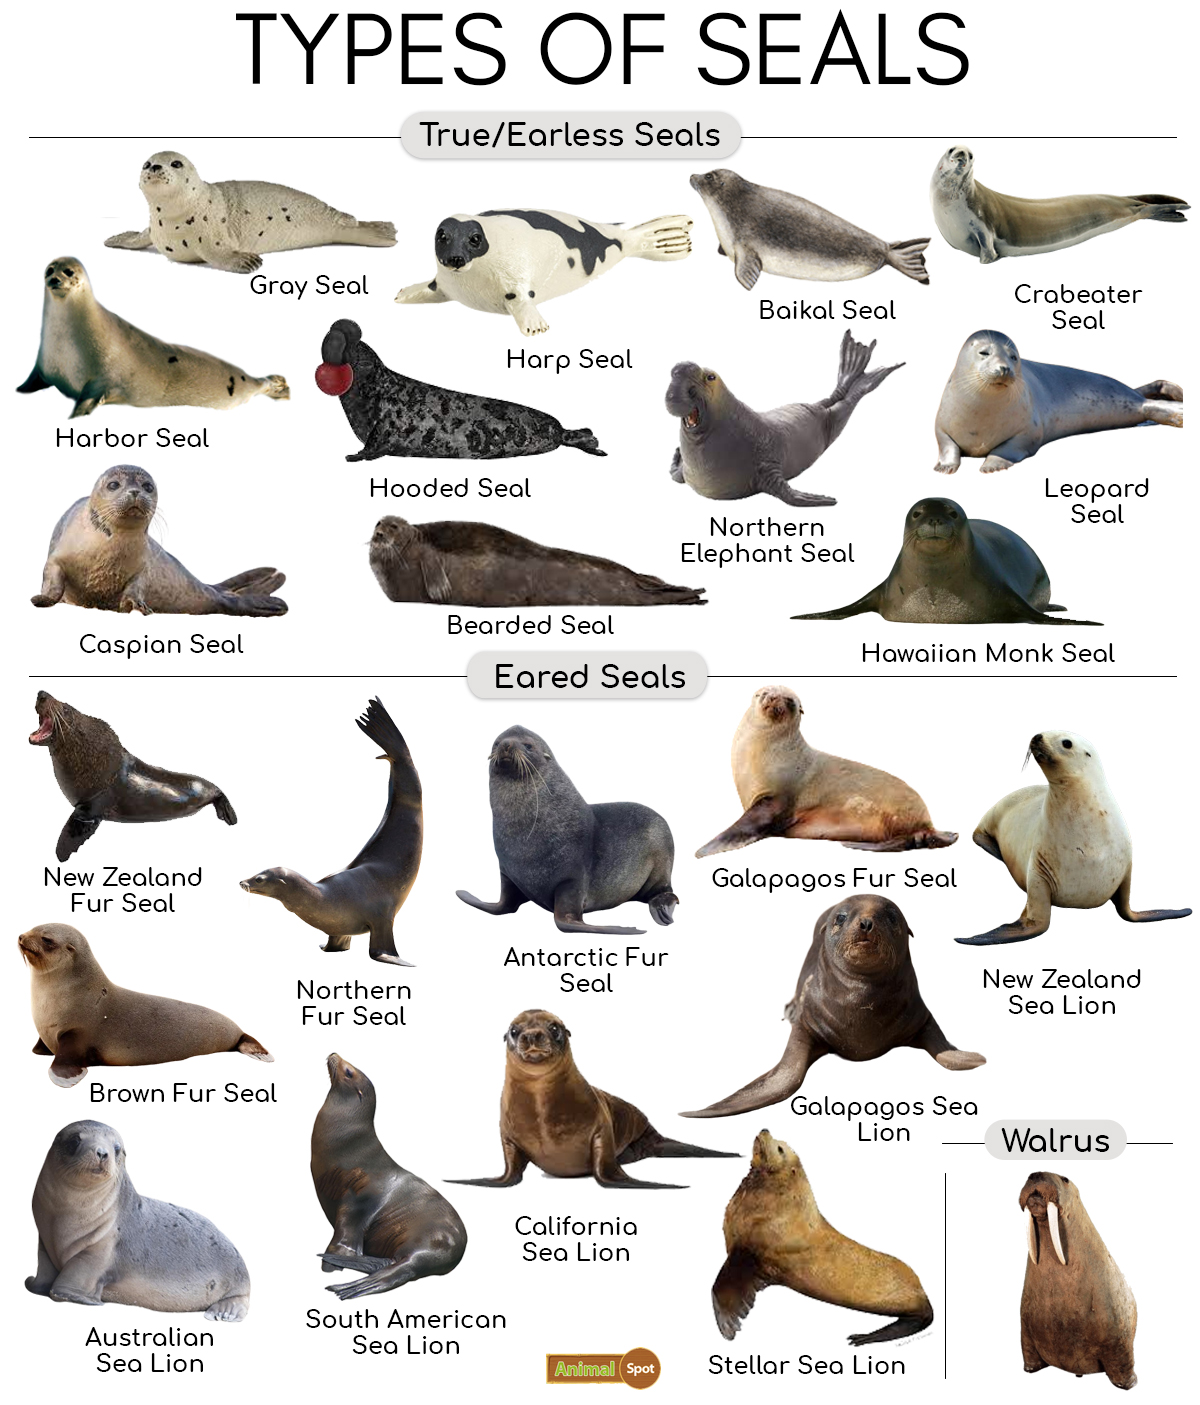 Types-of-Seals.jpg